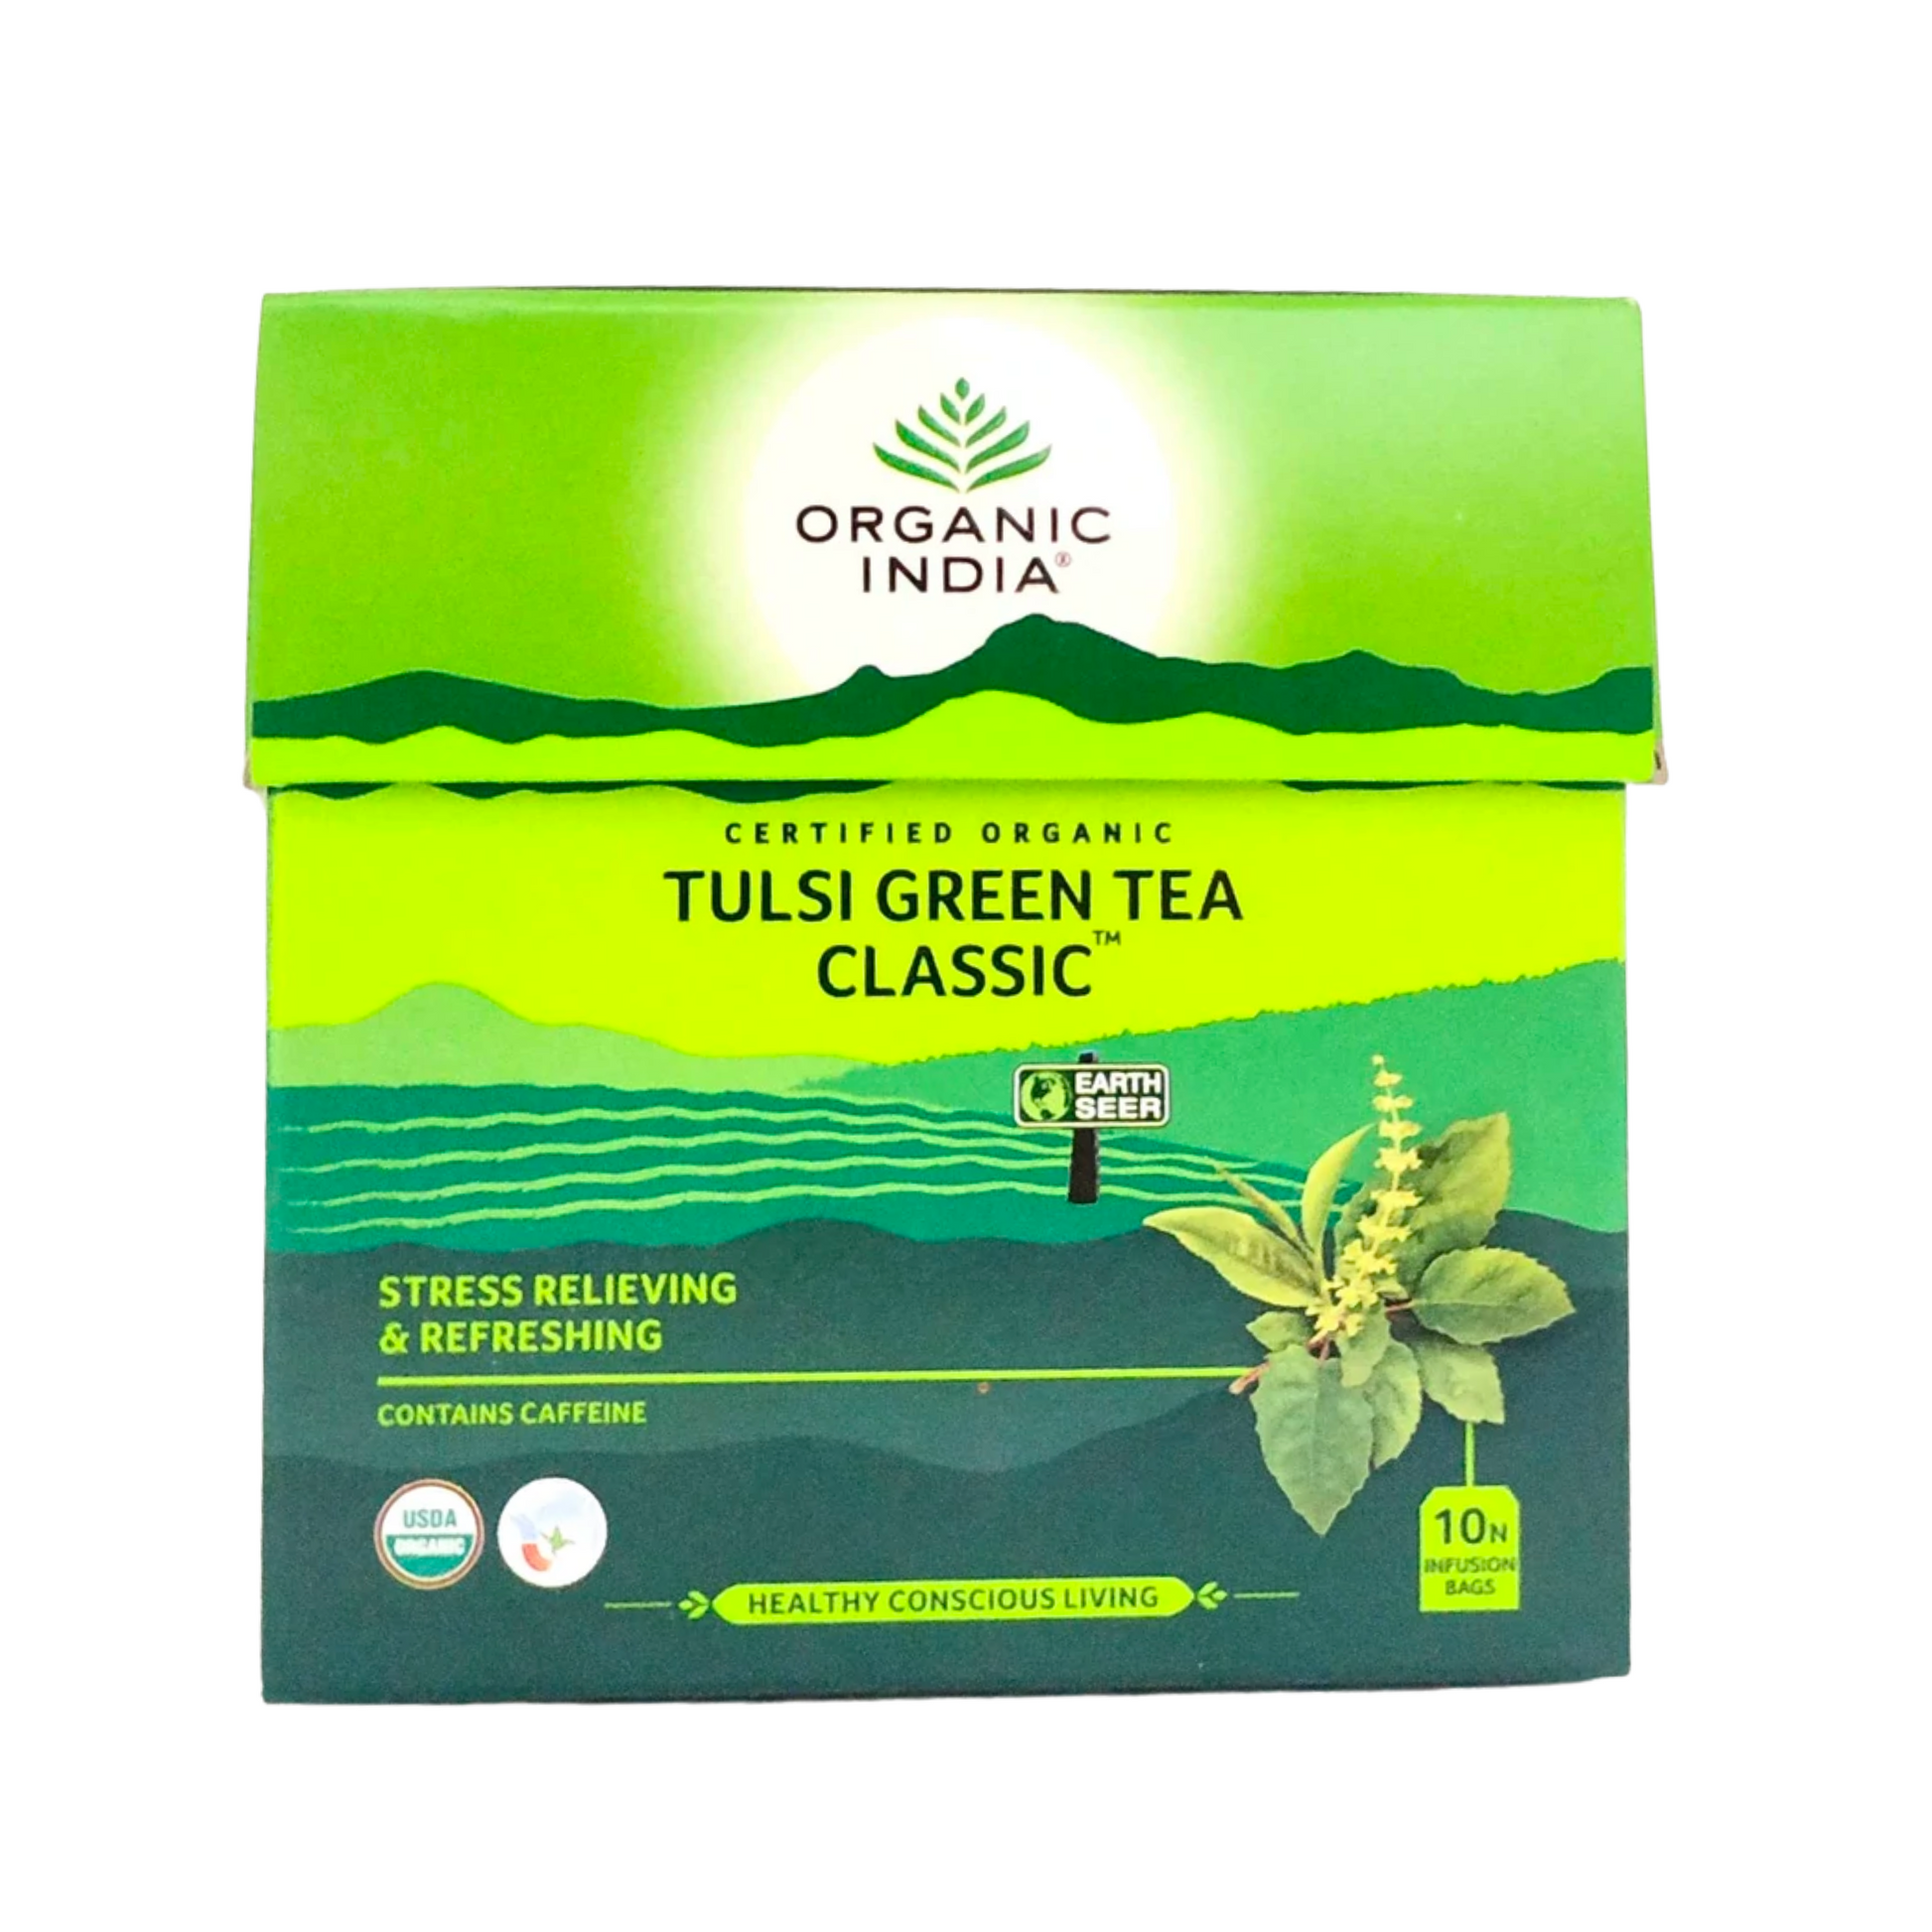 Shop Organic India Tulsi Green Tea Classic - 10 Sachets at price 74.00 from Organic India Online - Ayush Care